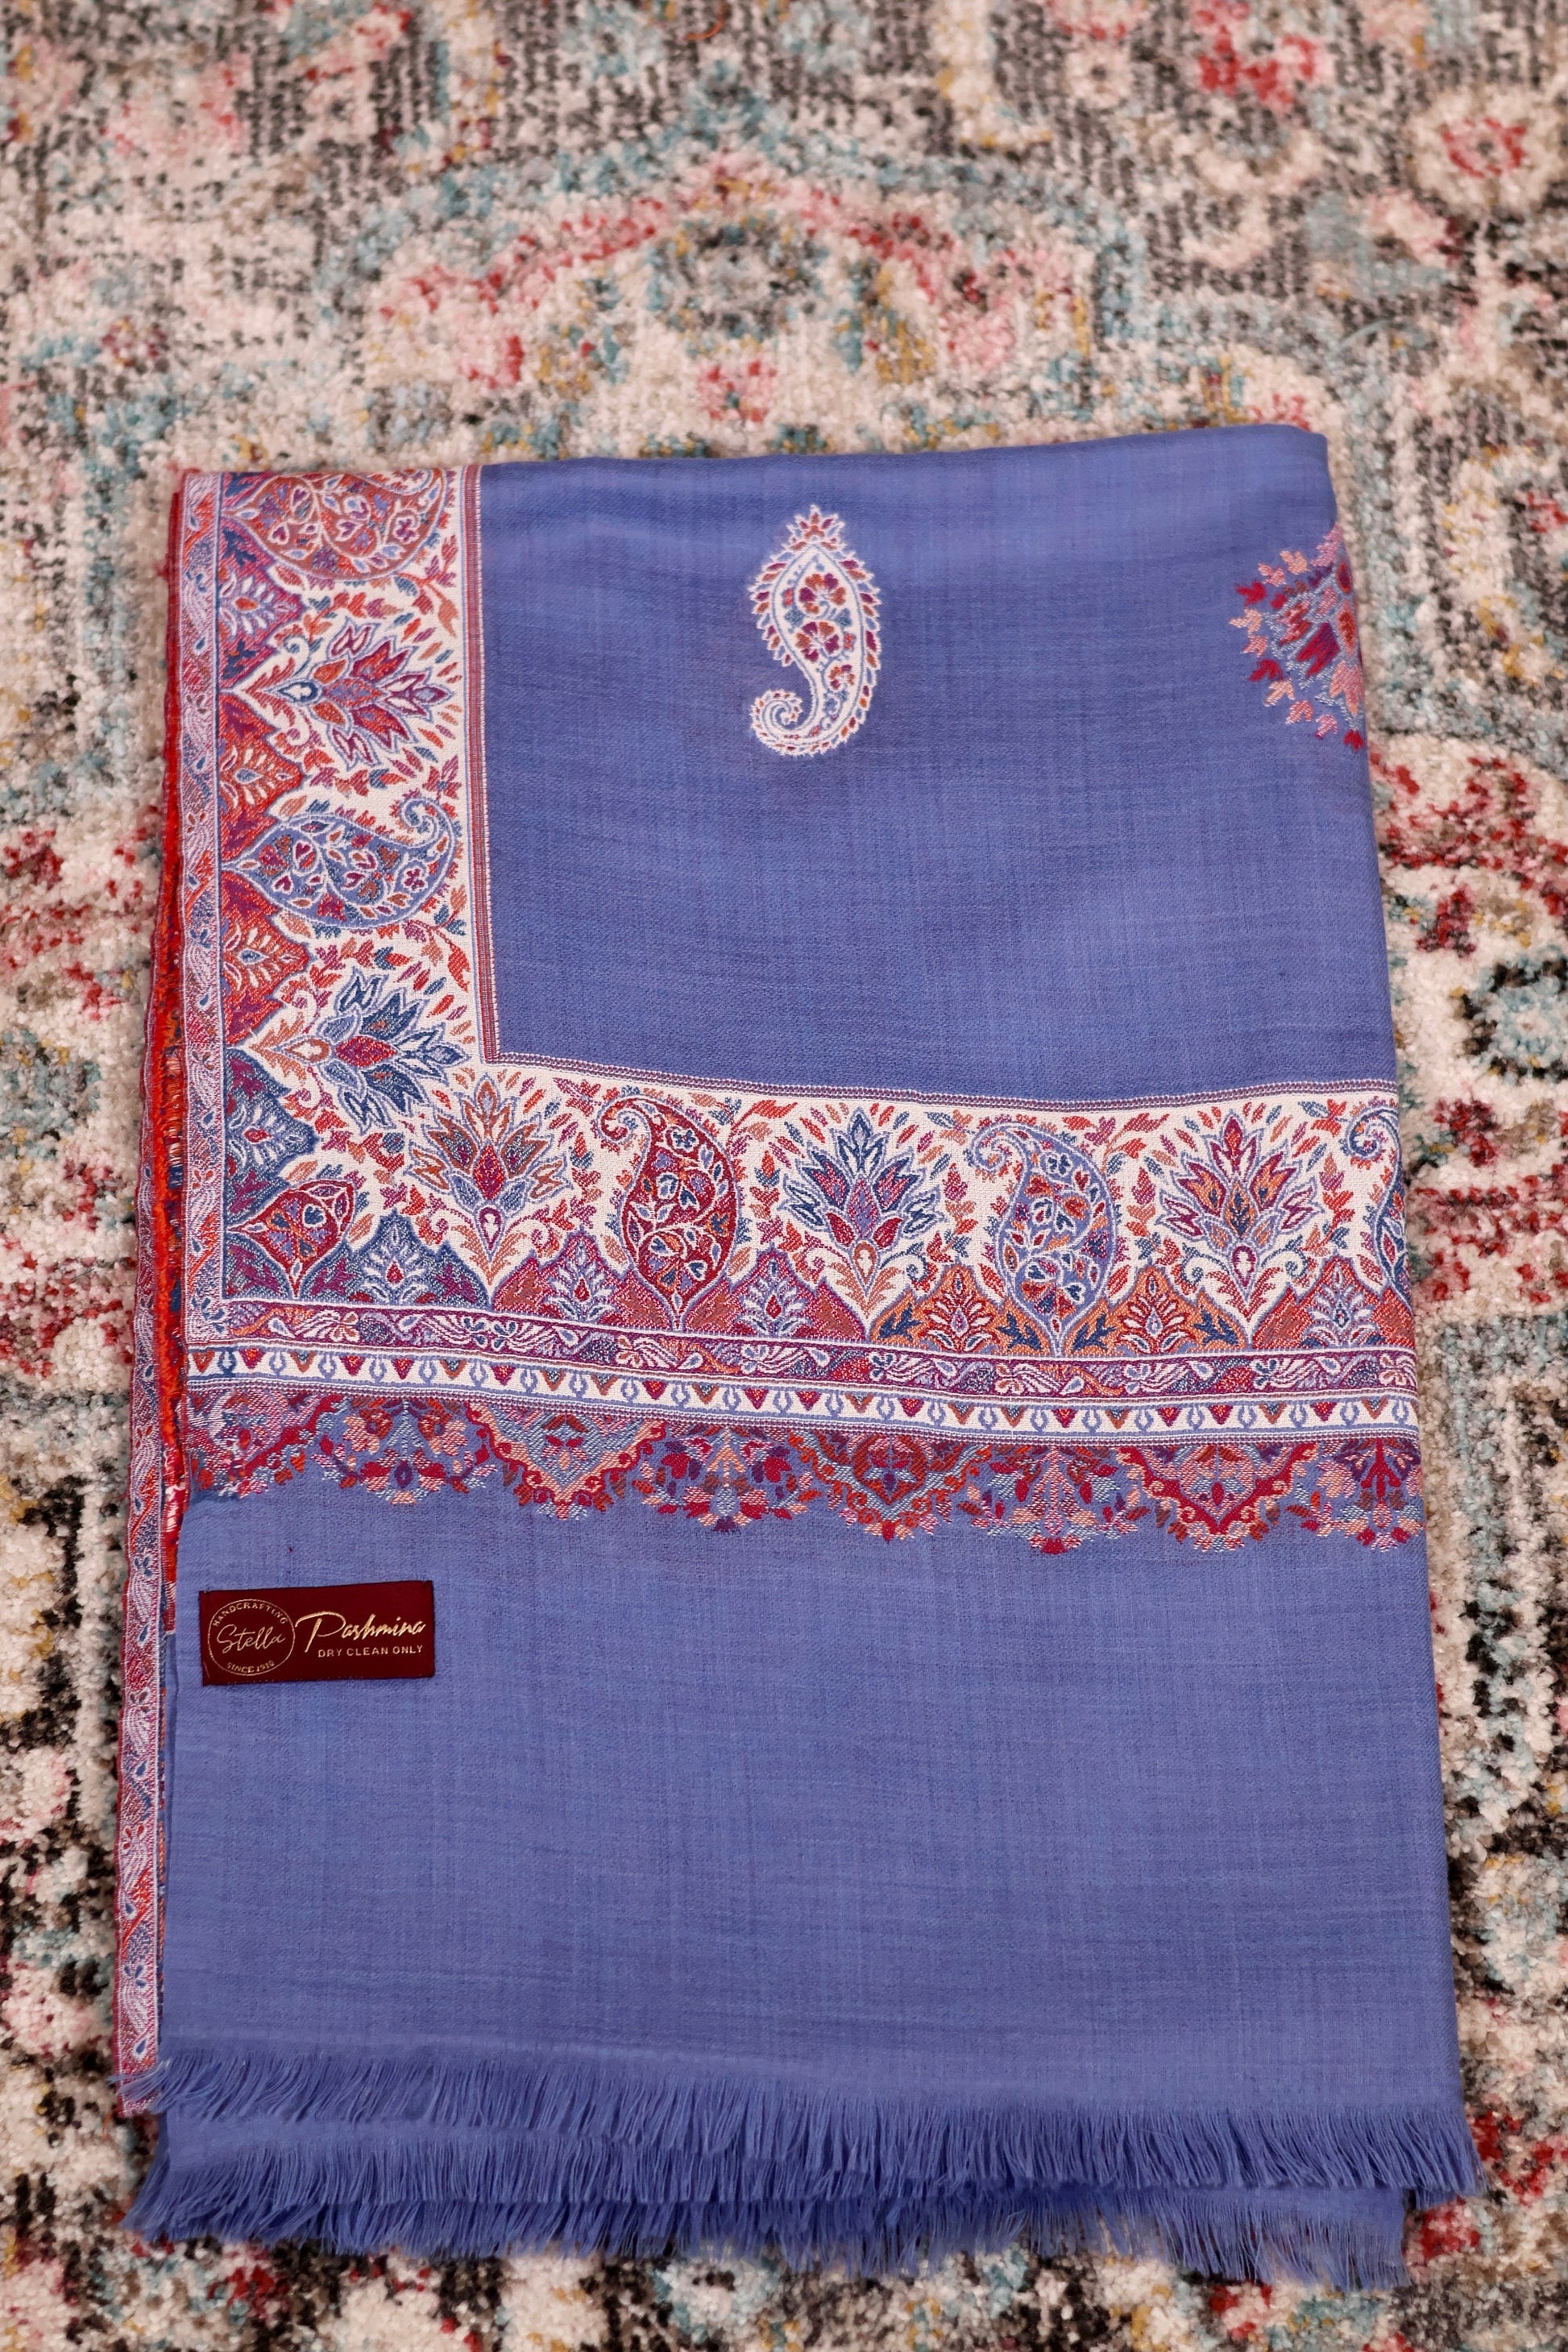 Blue Pashmina Cashmere Shawl, Kalamkari Kashmiri Pashmina Silk Shawl, Premium Cashmere Scarfs, Soft & Warm Shawls Christmas Gift